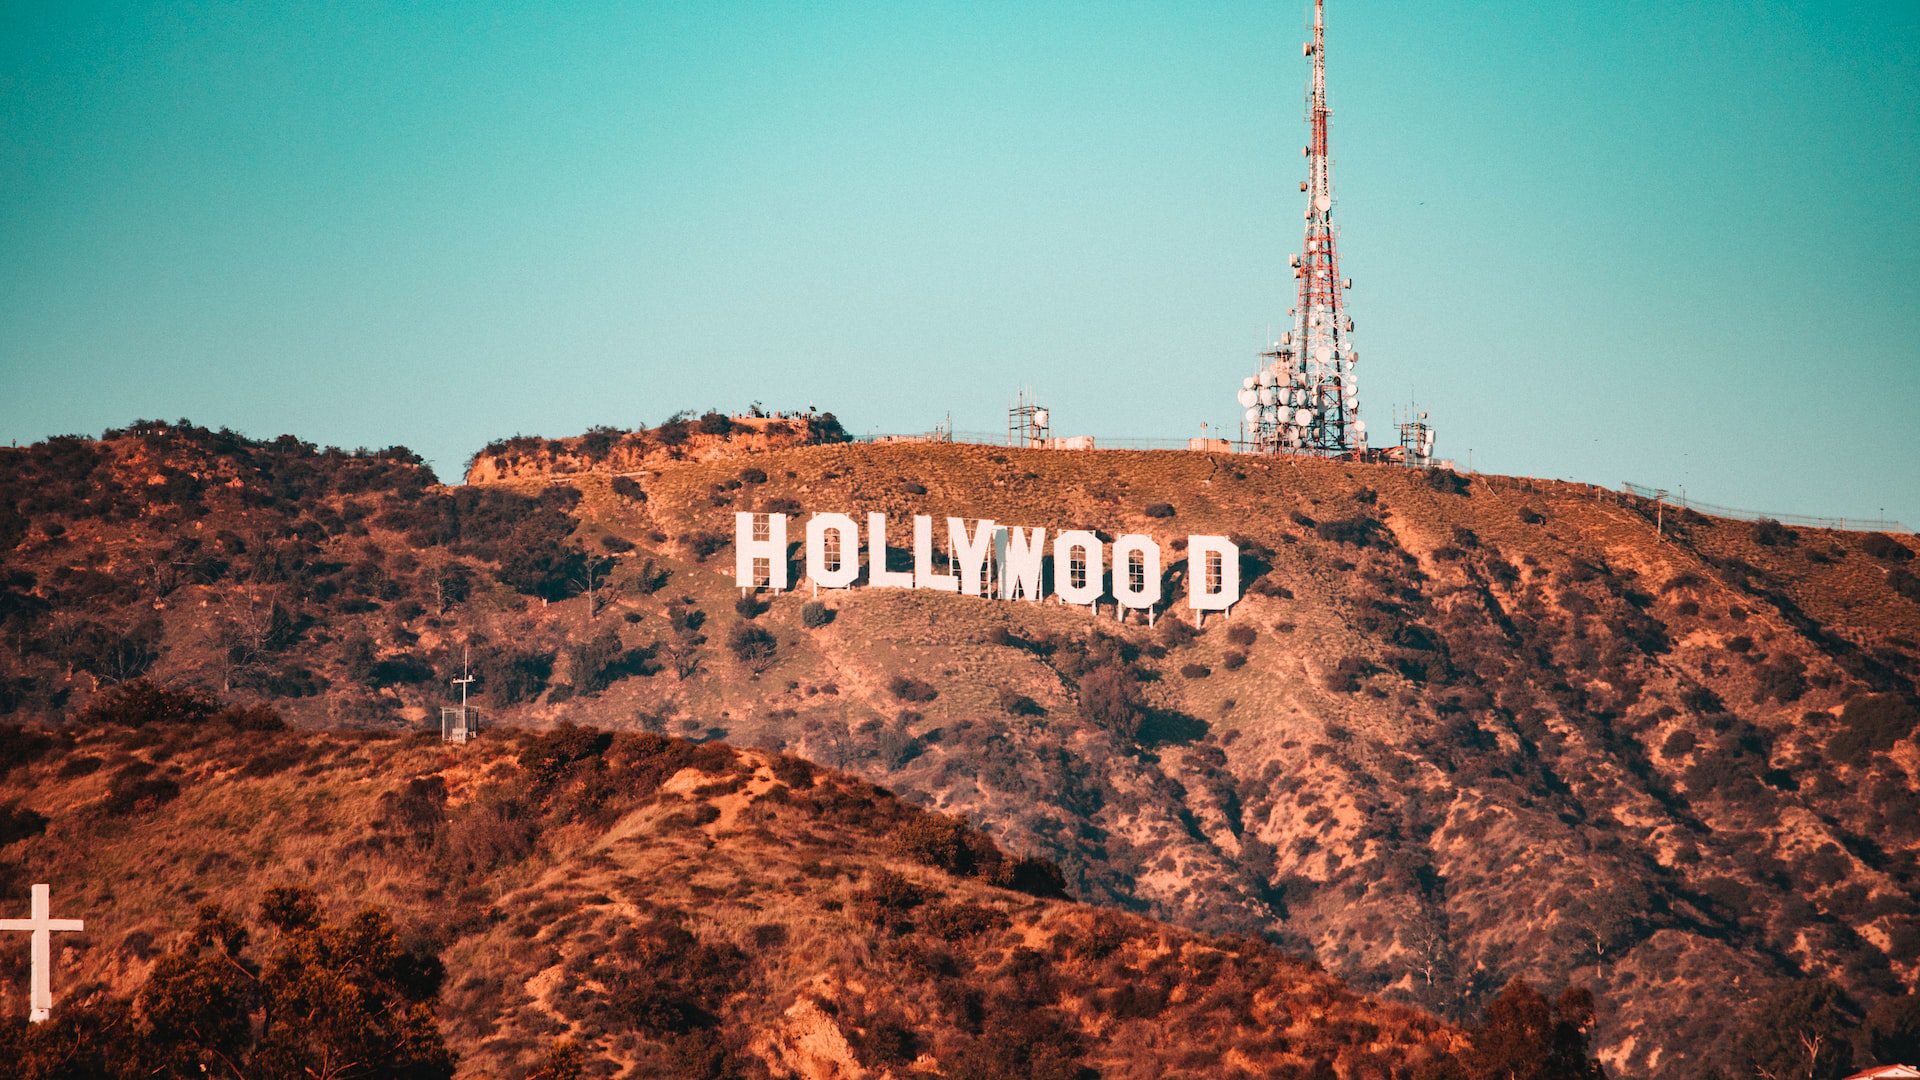 Hollywood sign on dry landscape 